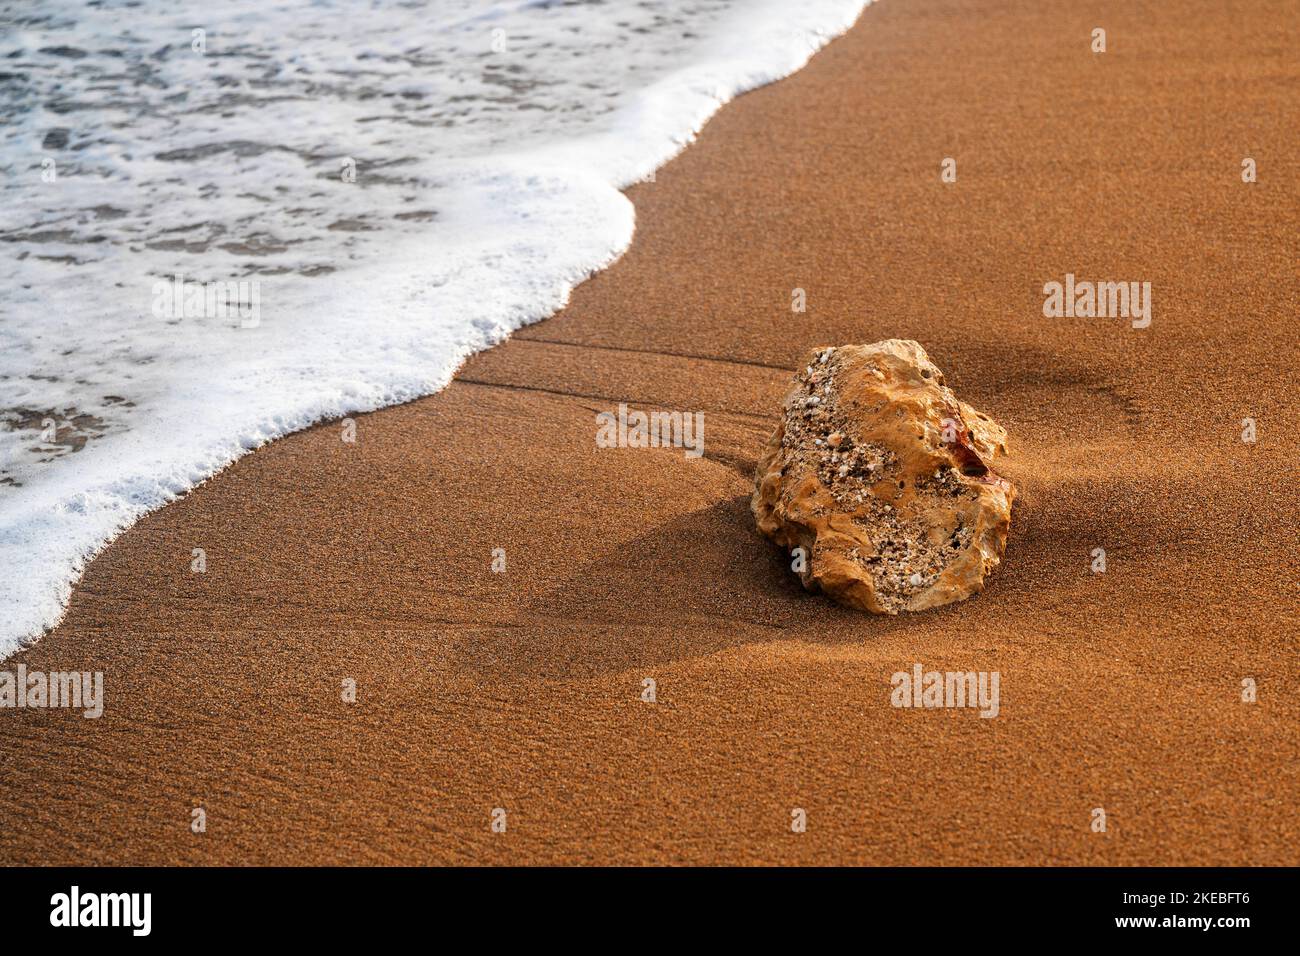 Small stone on sand beach with frothy sea aqua, nice texture of tiny grain of sand. Stock Photo